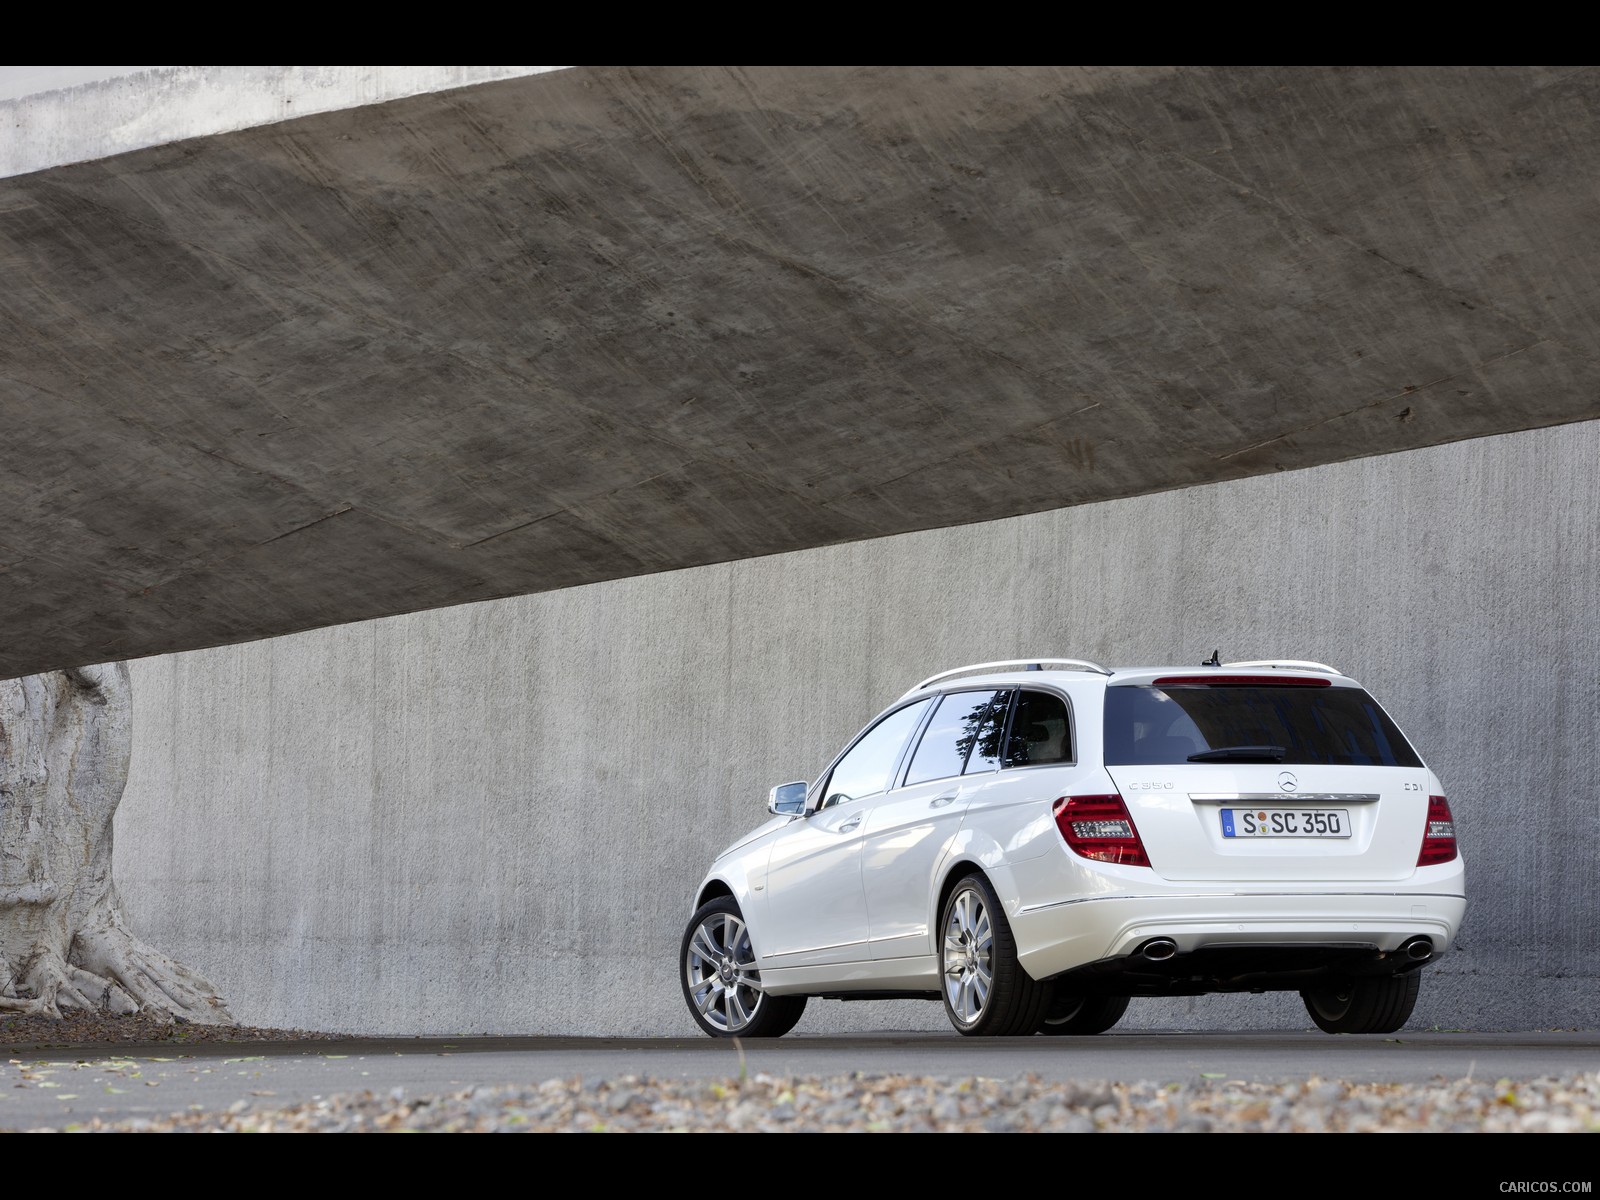 Mercedes-Benz C-Class Estate (2012)  - Rear Angle , #4 of 36